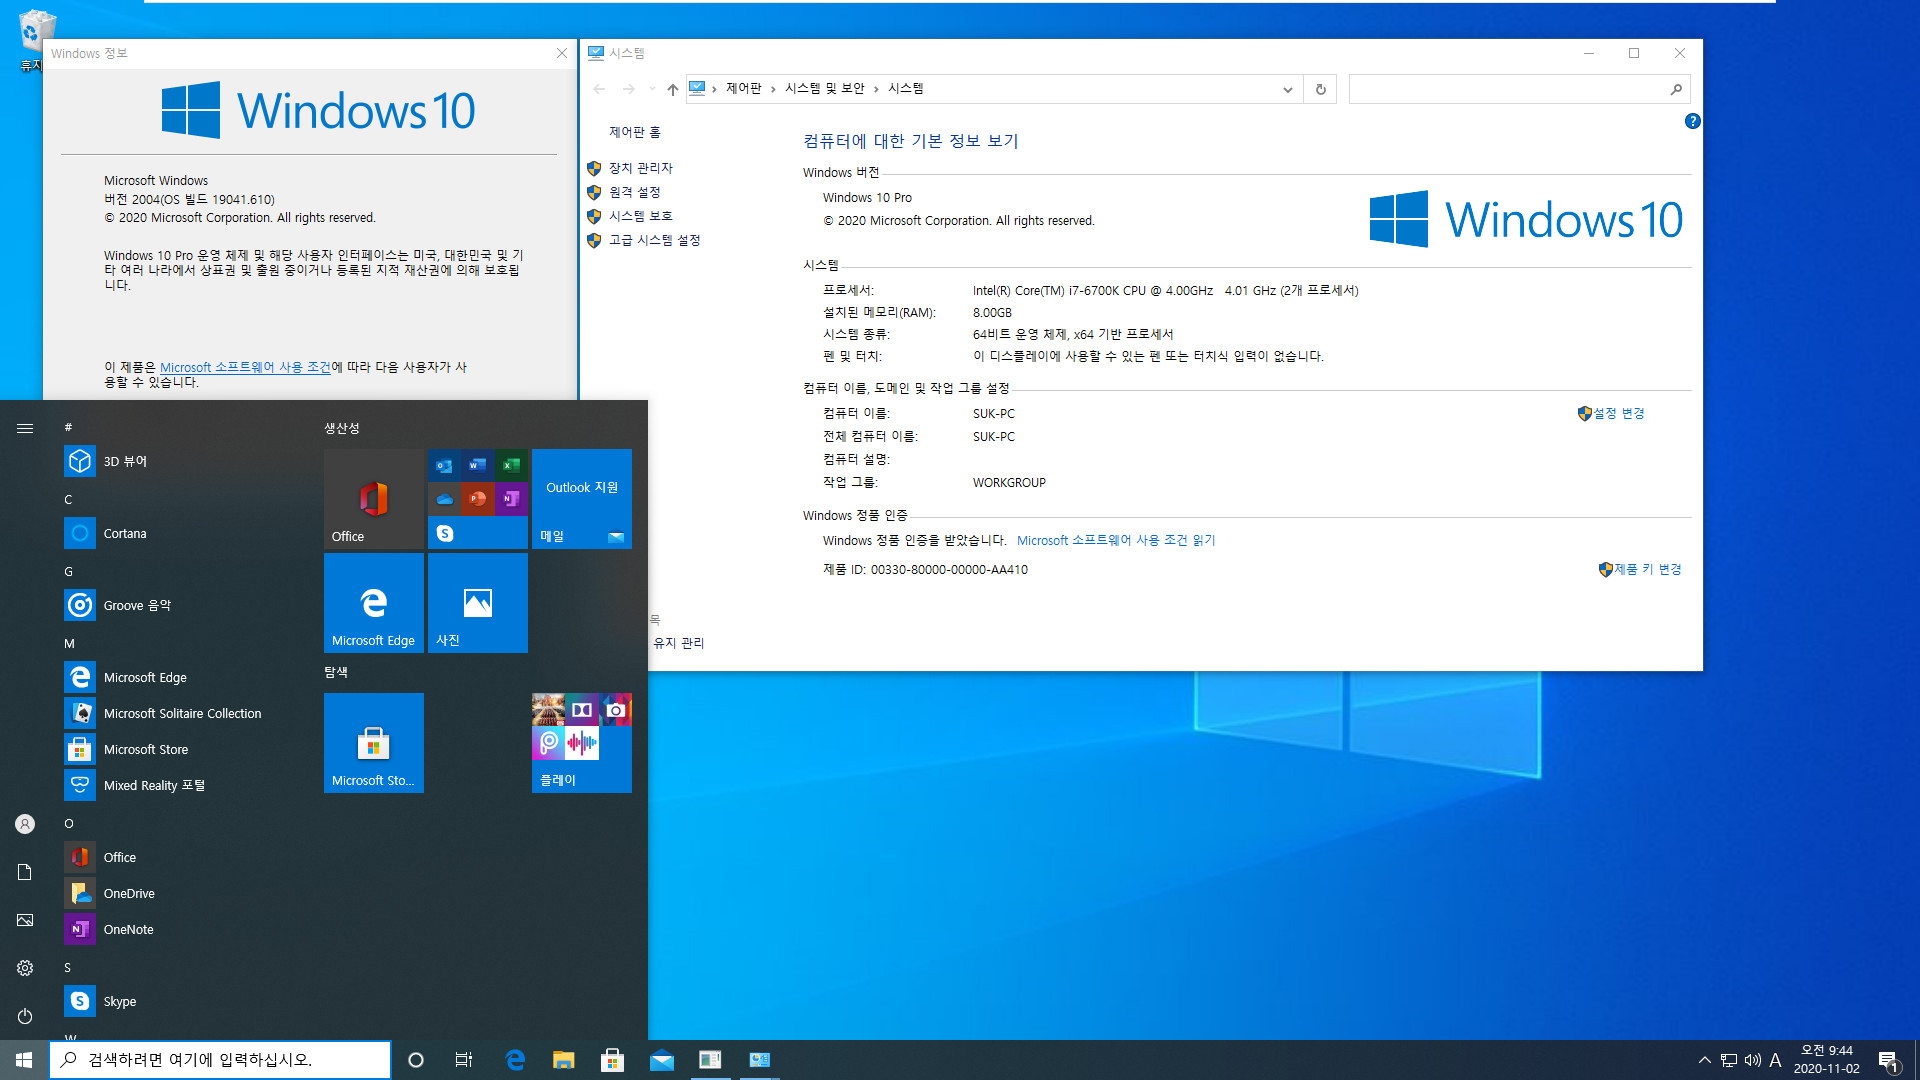 Windows 10 버전 20H2 기능 업데이트 KB4562830 폴더의 mum 파일들만 찾아서 설치하기.bat - 크로미엄 엣지 설치하지 않고 버전 20H2만 설치하기 테스트 2020-11-02_094452.jpg